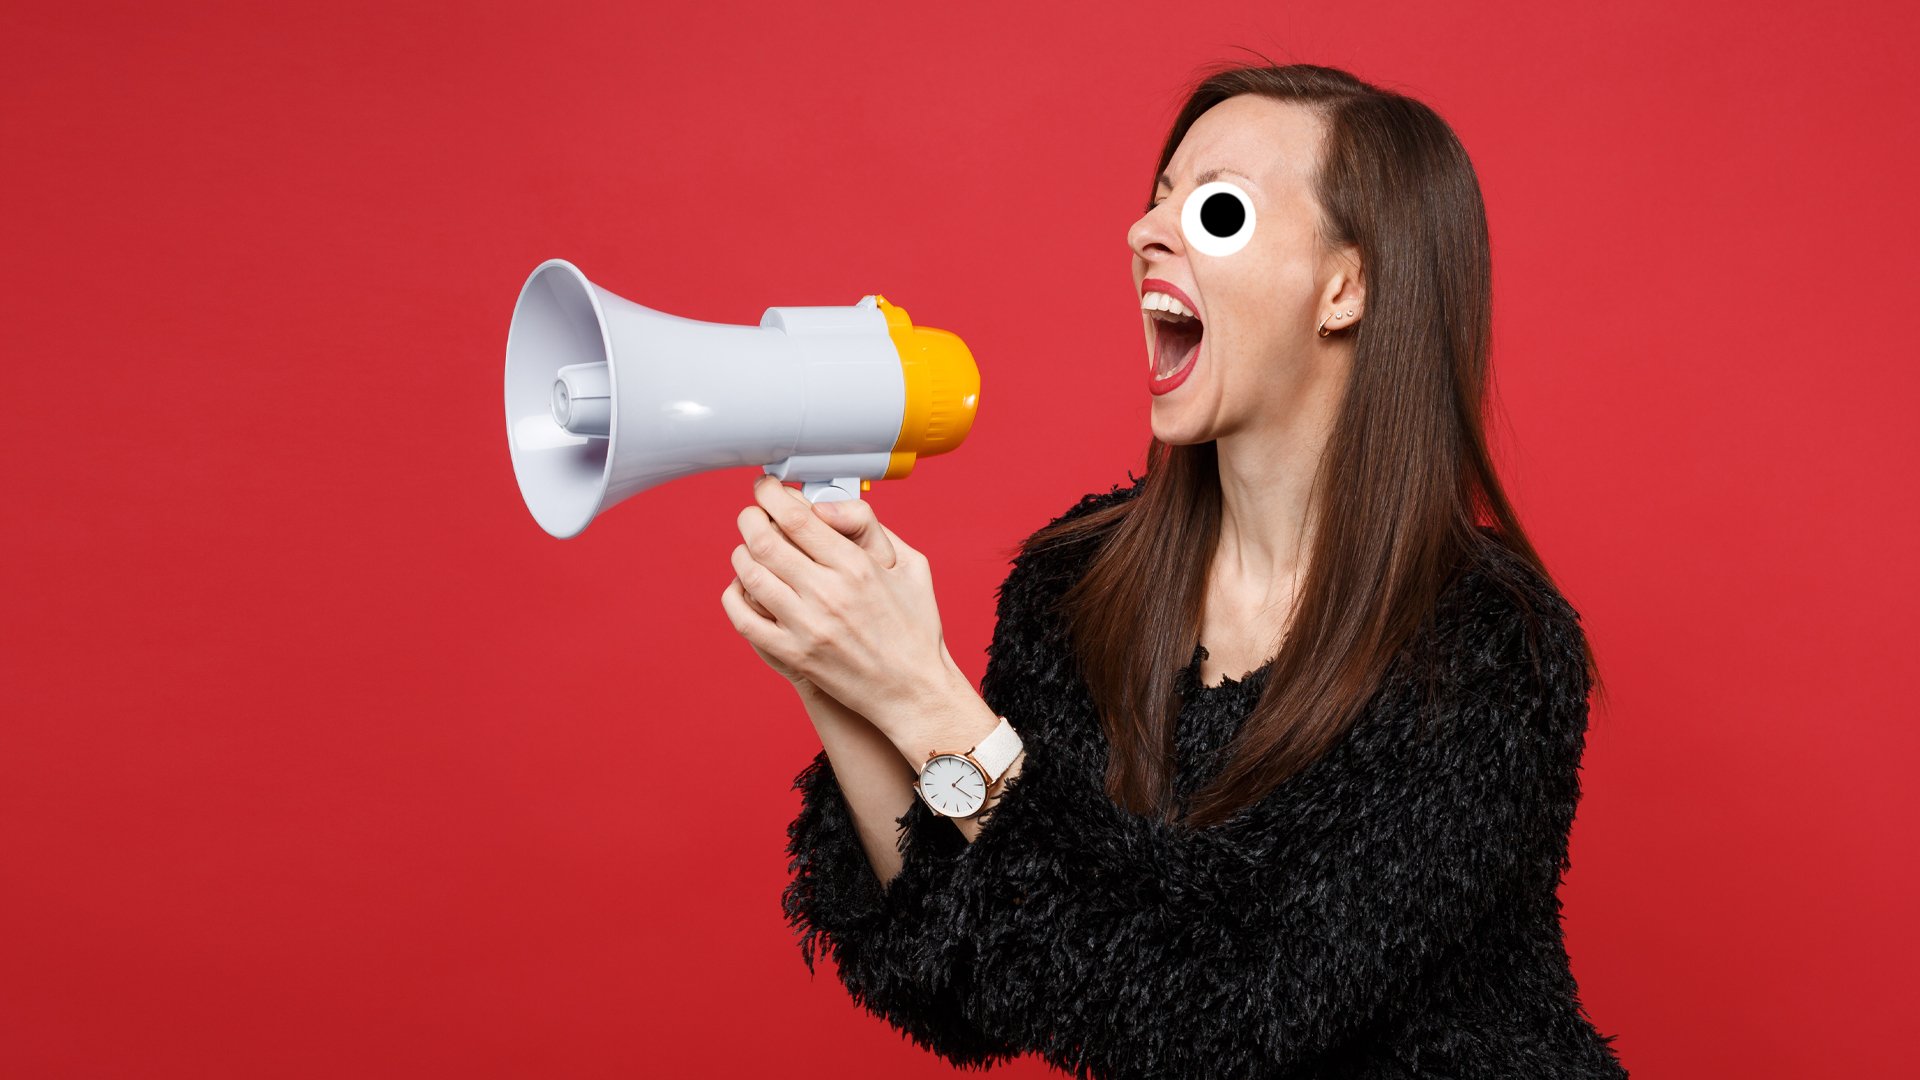 A woman shouting into a megaphone